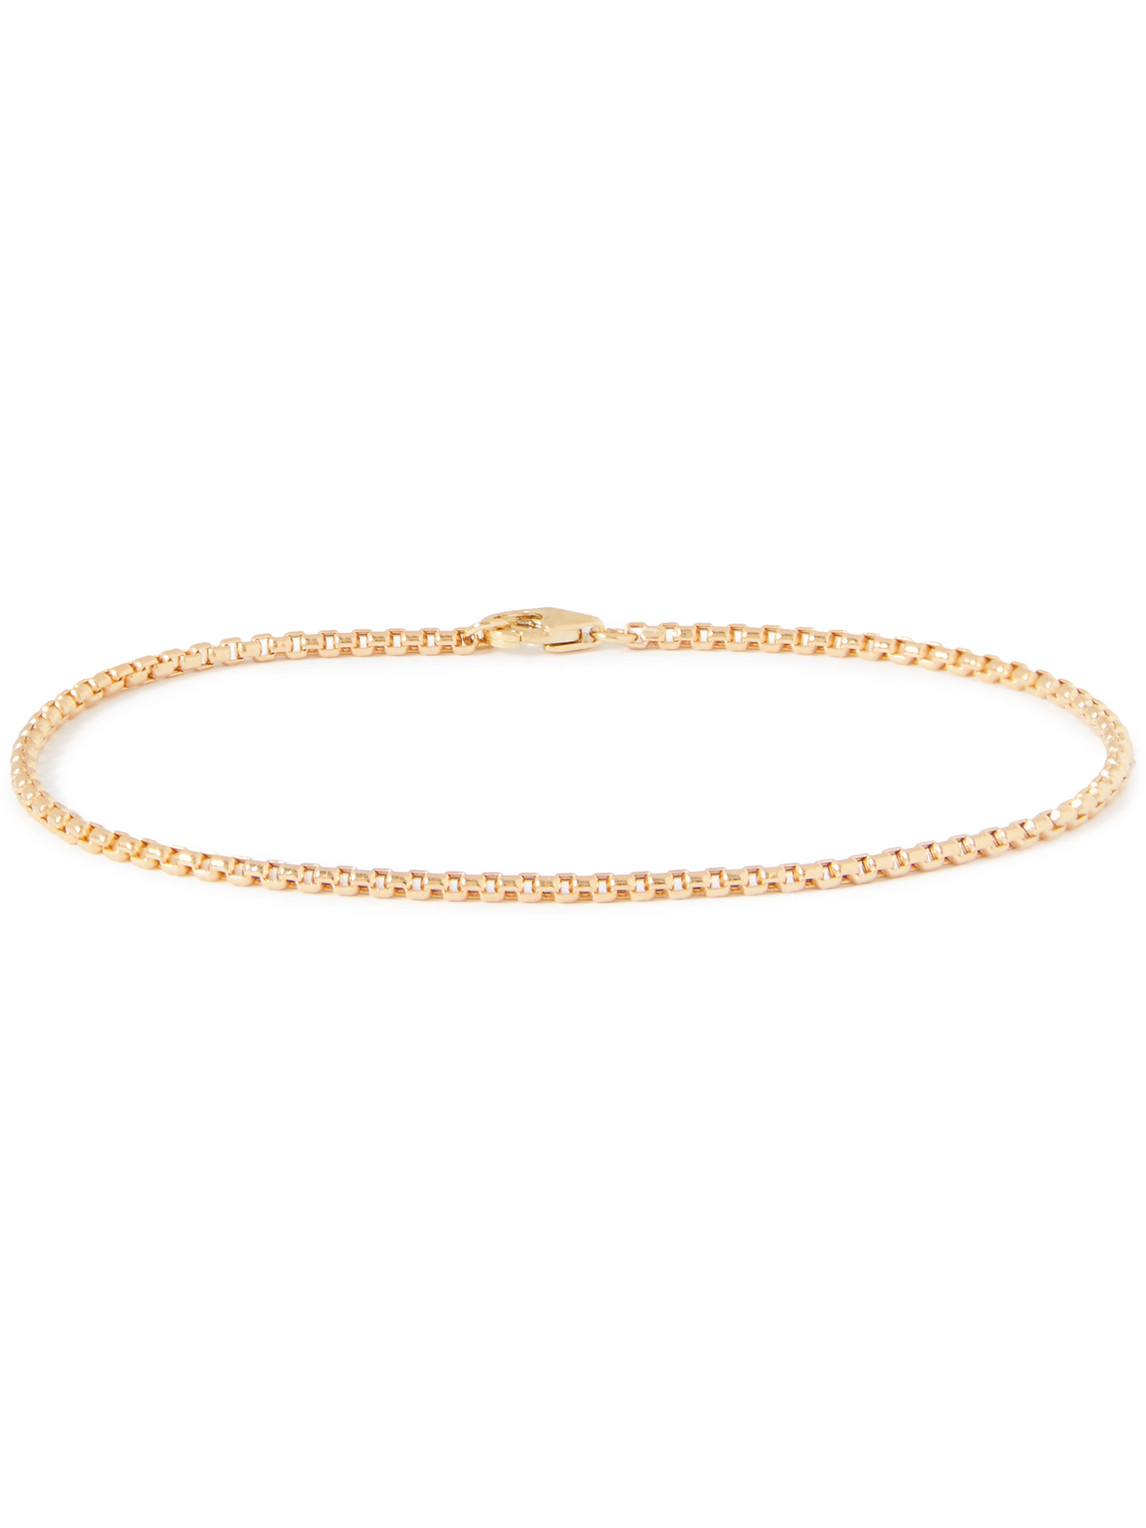 Miansai Venetian Gold Chain Bracelet